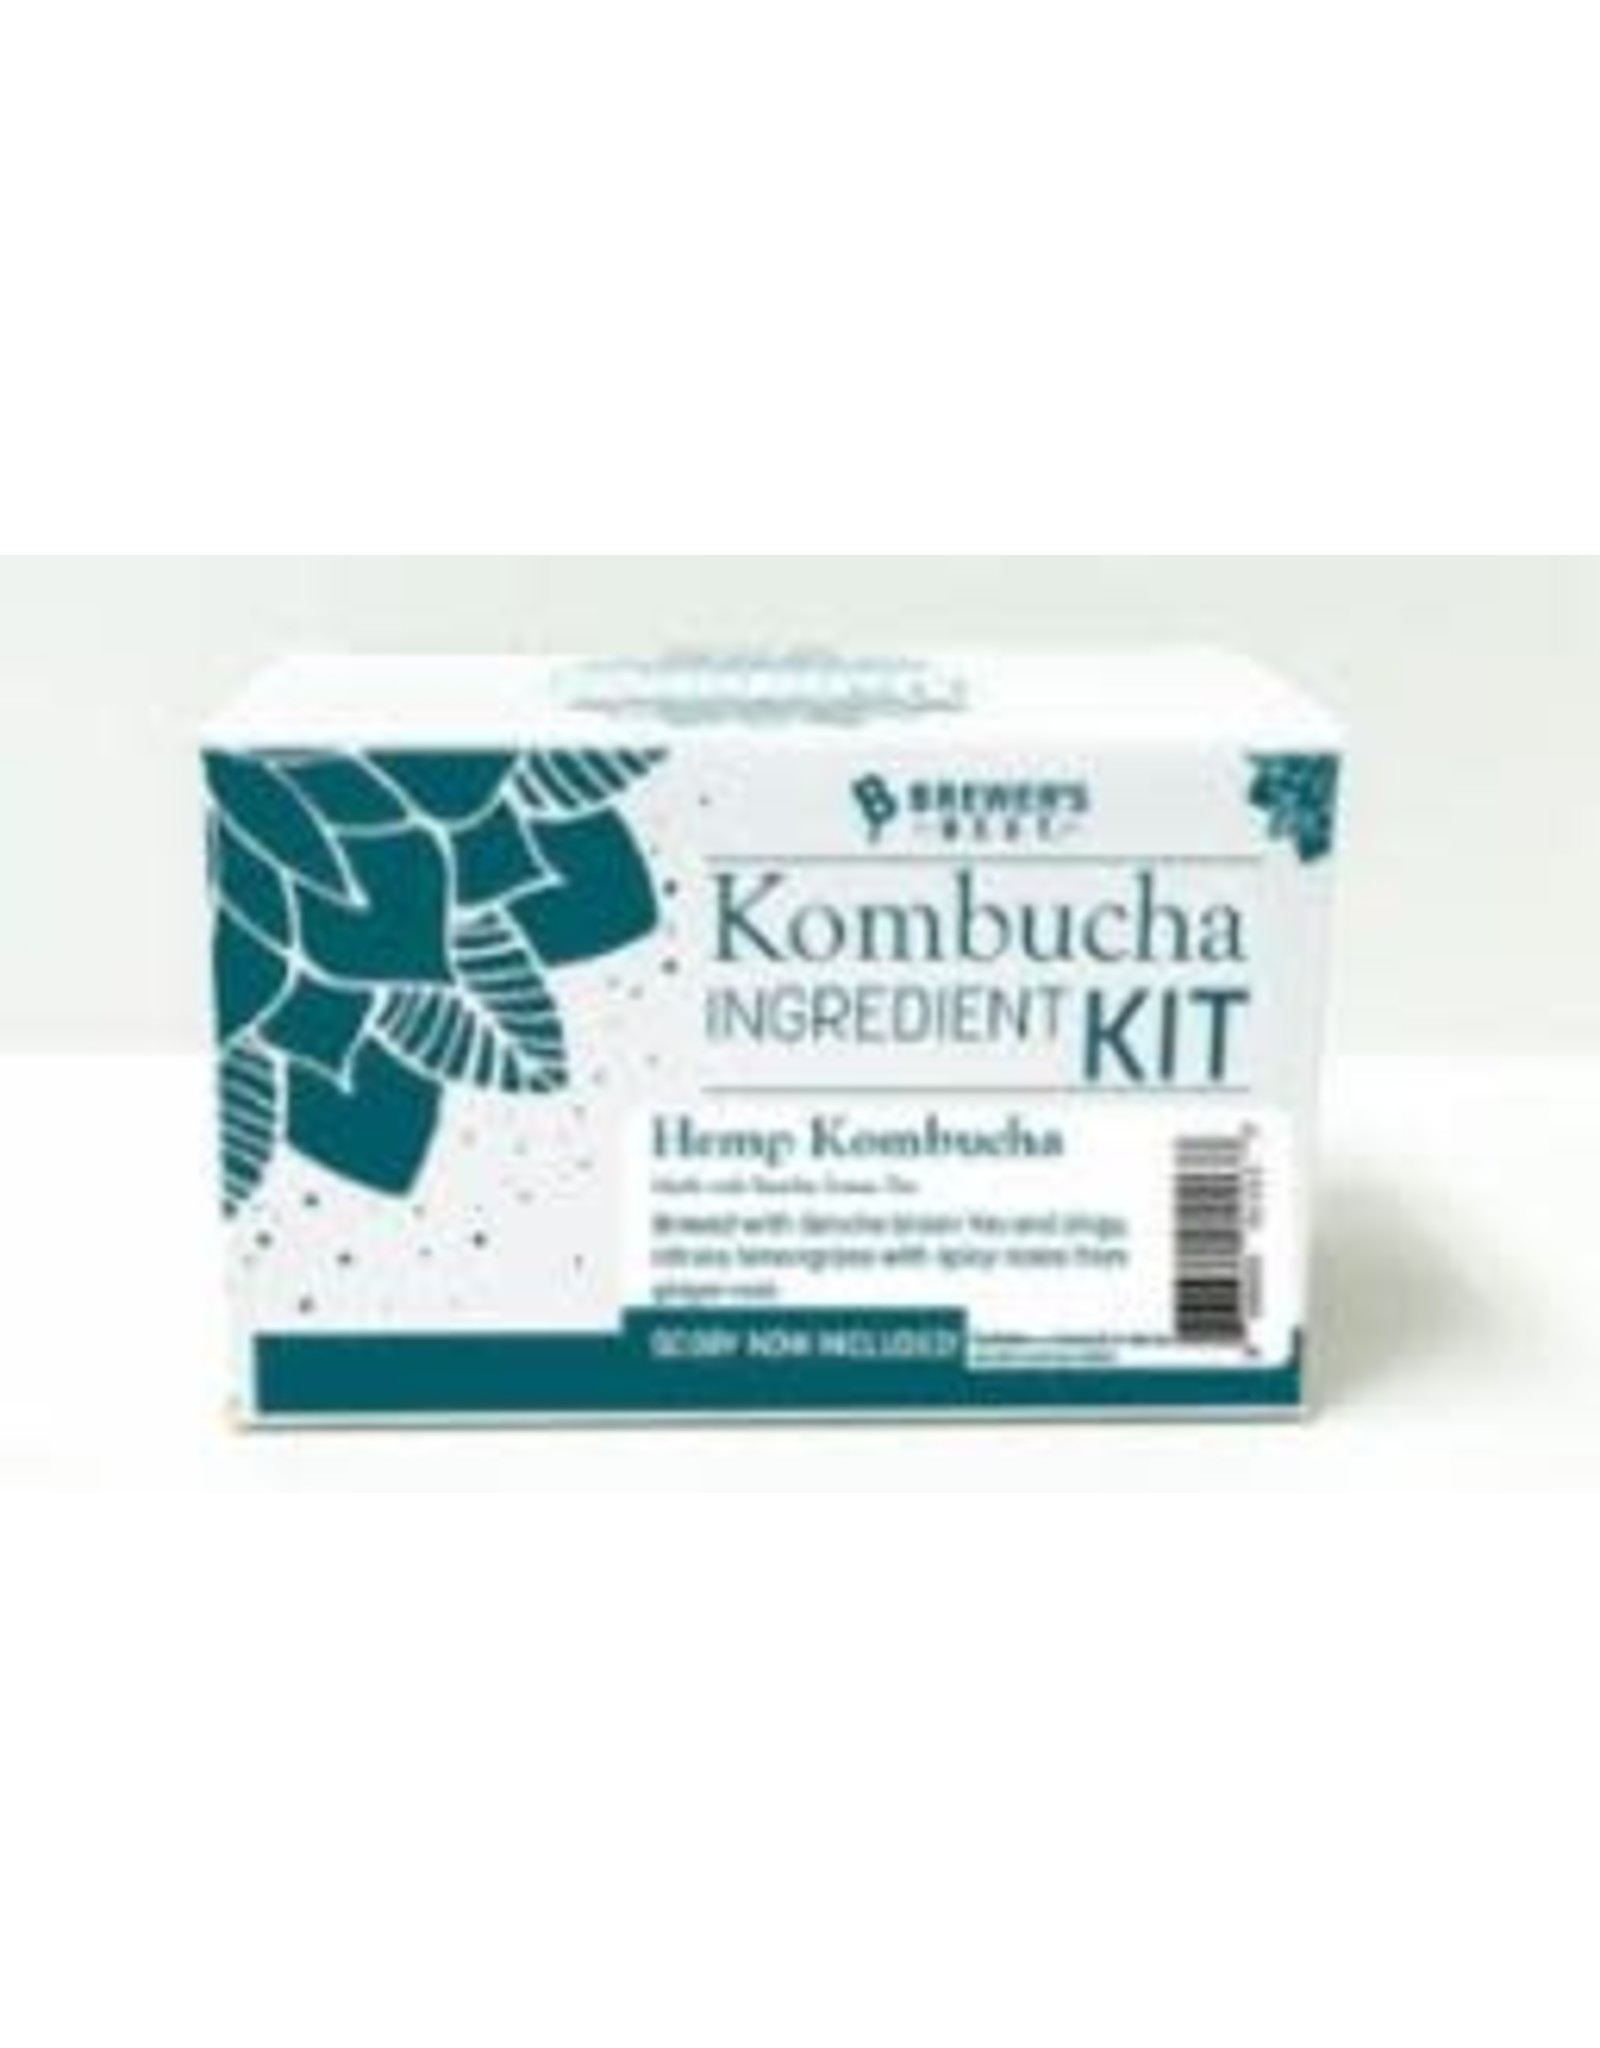 Hemp Green Tea Kombucha ingredient kit